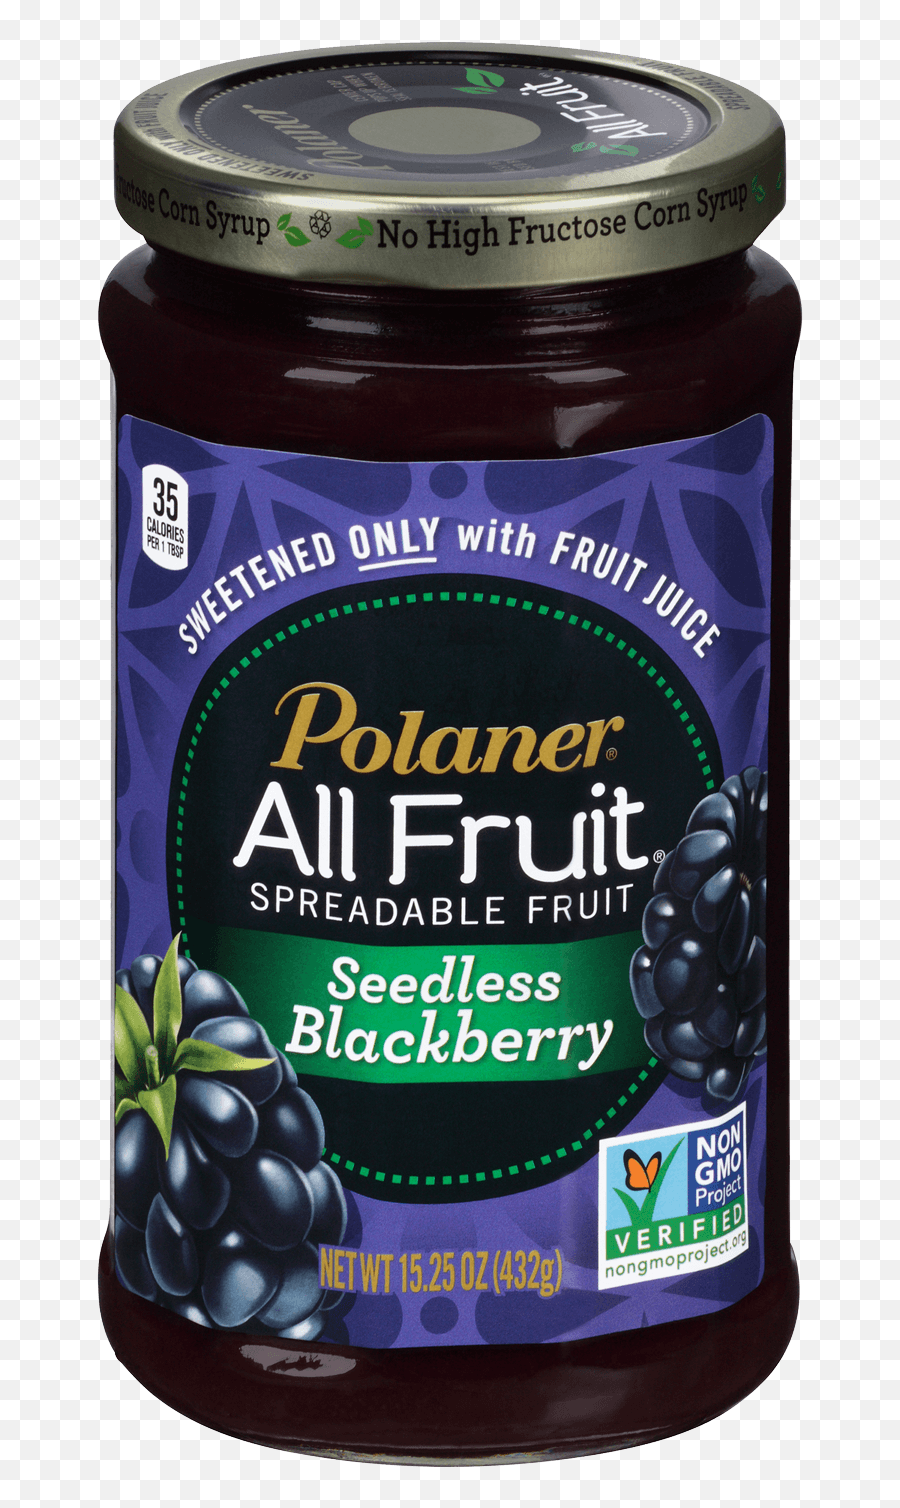 Seedless Blackberry - All Fruit Blueberry Spread Png,Blackberries Png